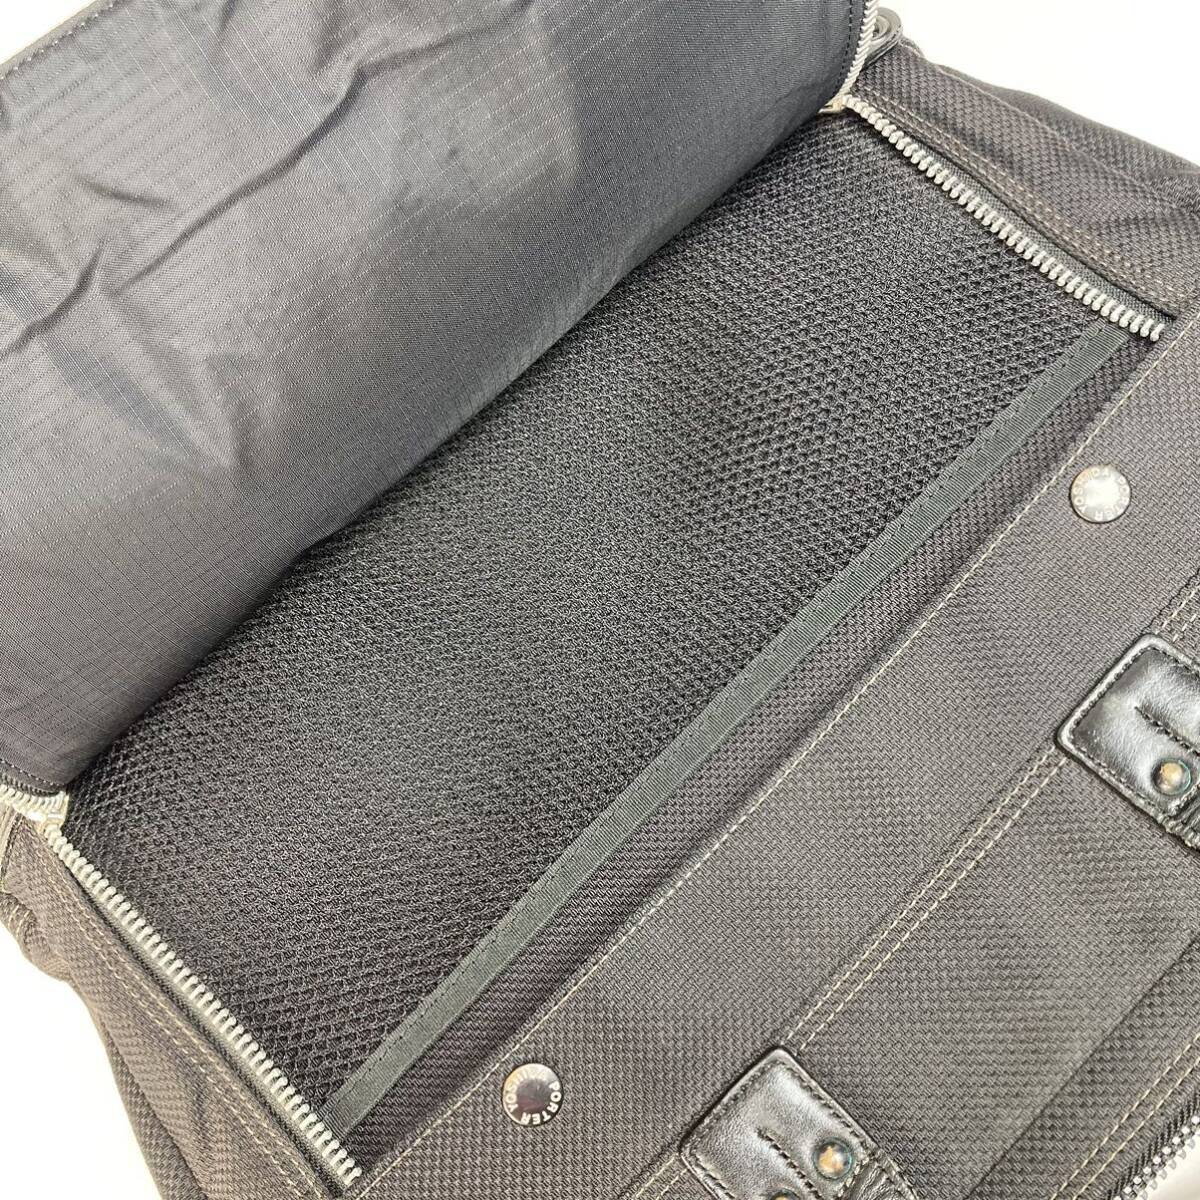 1 jpy start PORTER Porter leather original leather business bag briefcase handbag multifunction A4 storage dark brown commuting men's 